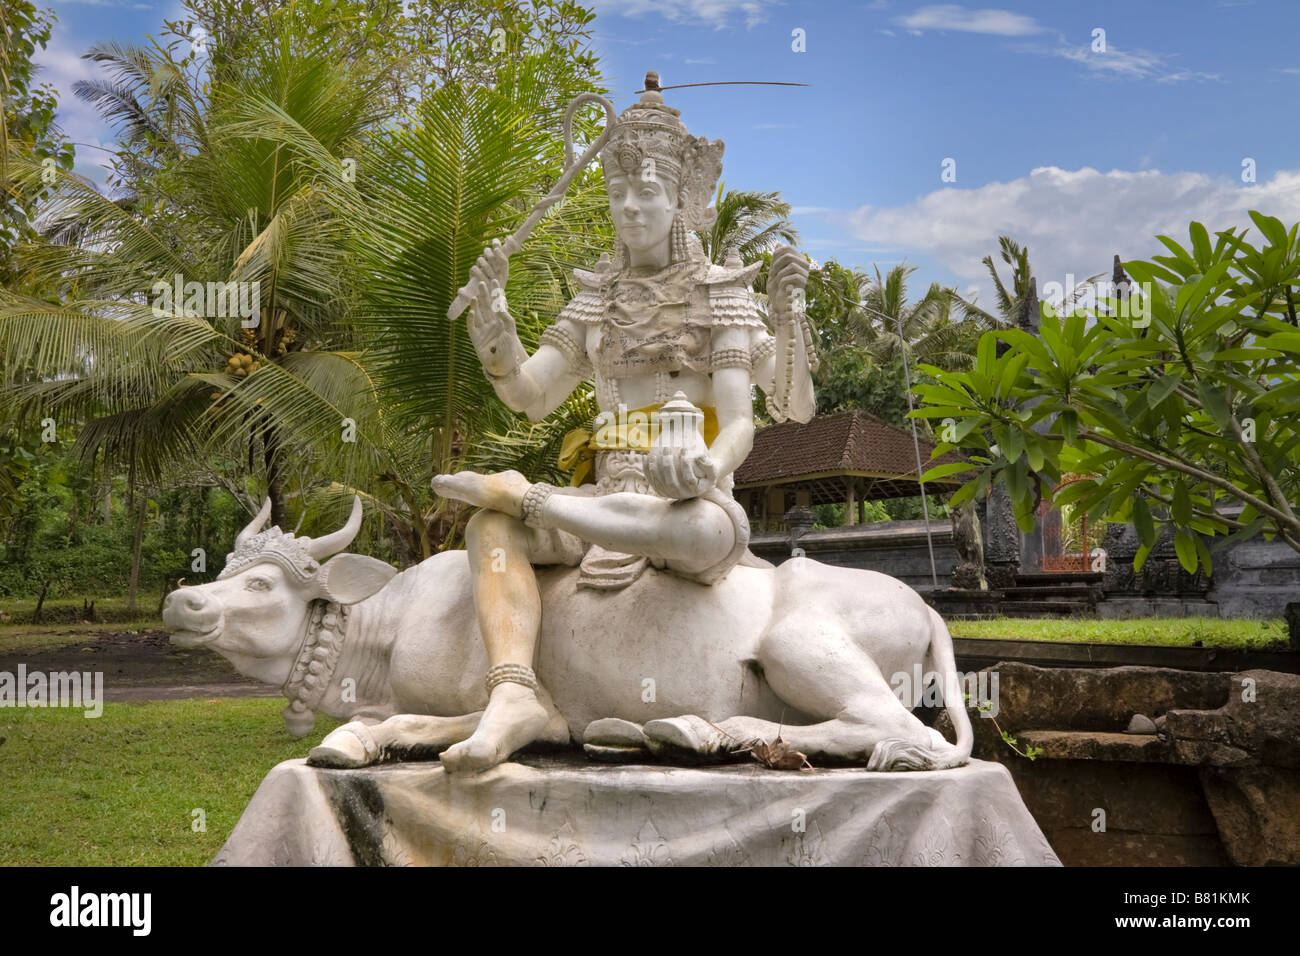 Statue of the Balinese Hindu deity Siwa sitting on the bull Nandi at the village temple of Pura Dalem, Desa Pekutatan, Bali Stock Photo